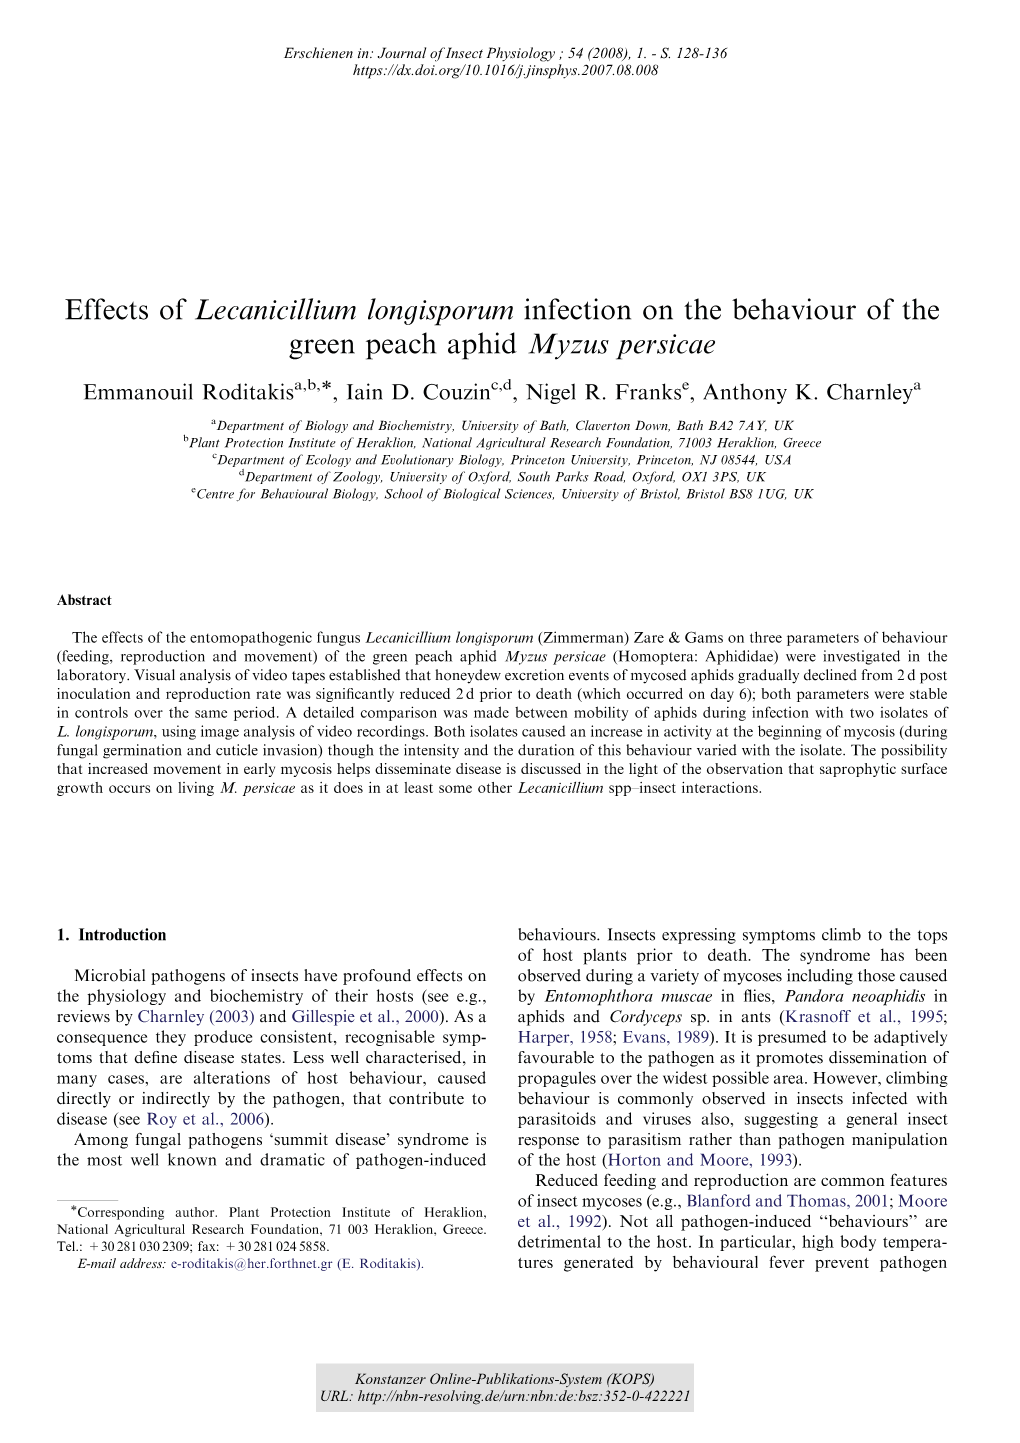 Effects of Lecanicillium Longisporum Infection on the Behaviour of the Green Peach Aphid Myzus Persicae Ã Emmanouil Roditakisa,B, , Iain D